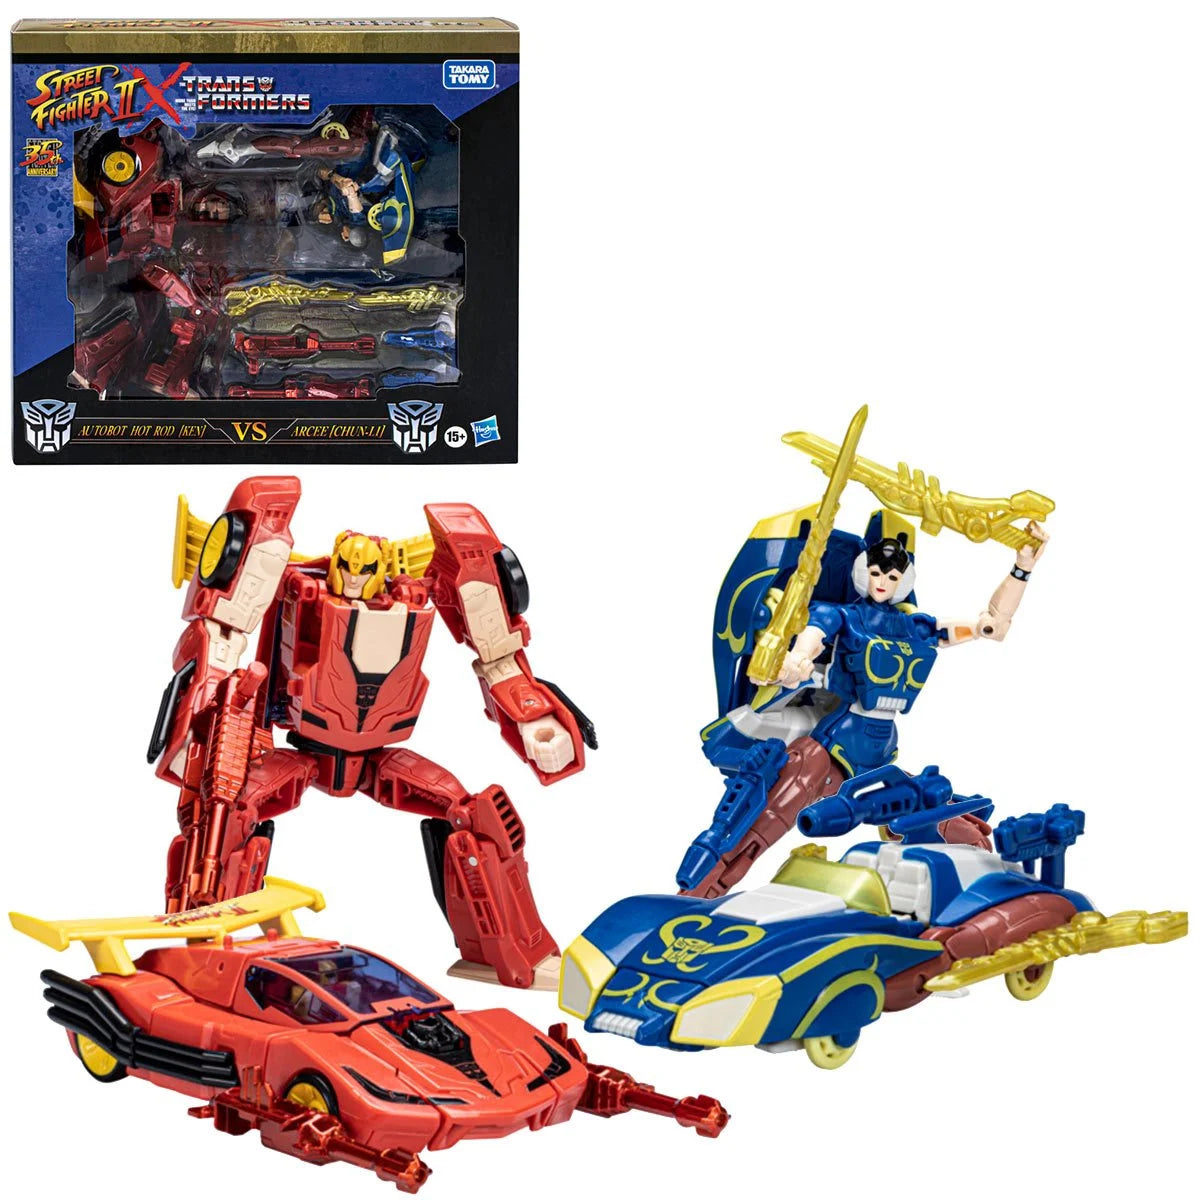 Transformers x Street Fighter II Mash-Up Hot Rod [Ken] vs. Arcee [Chun-Li] 2-Pack Hasbro Mint Condition